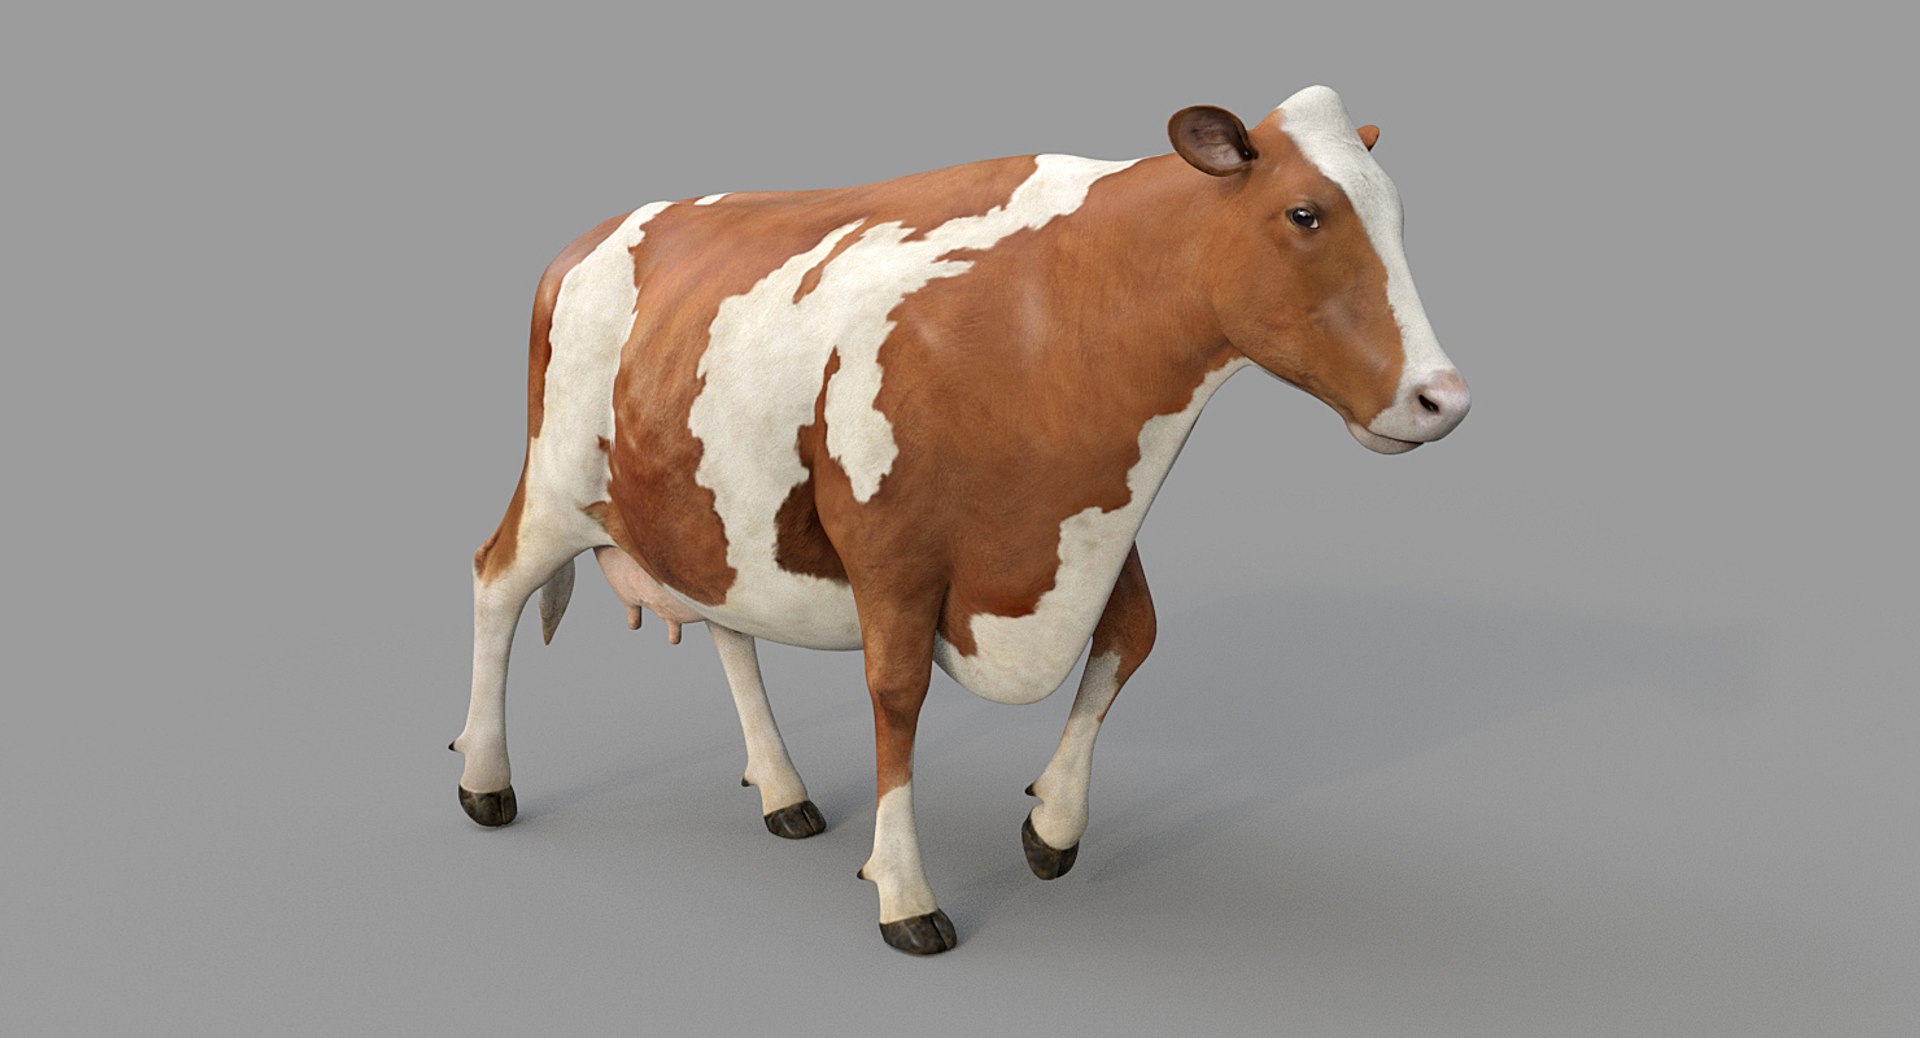 1,361 Mini Cow Images, Stock Photos, 3D objects, & Vectors